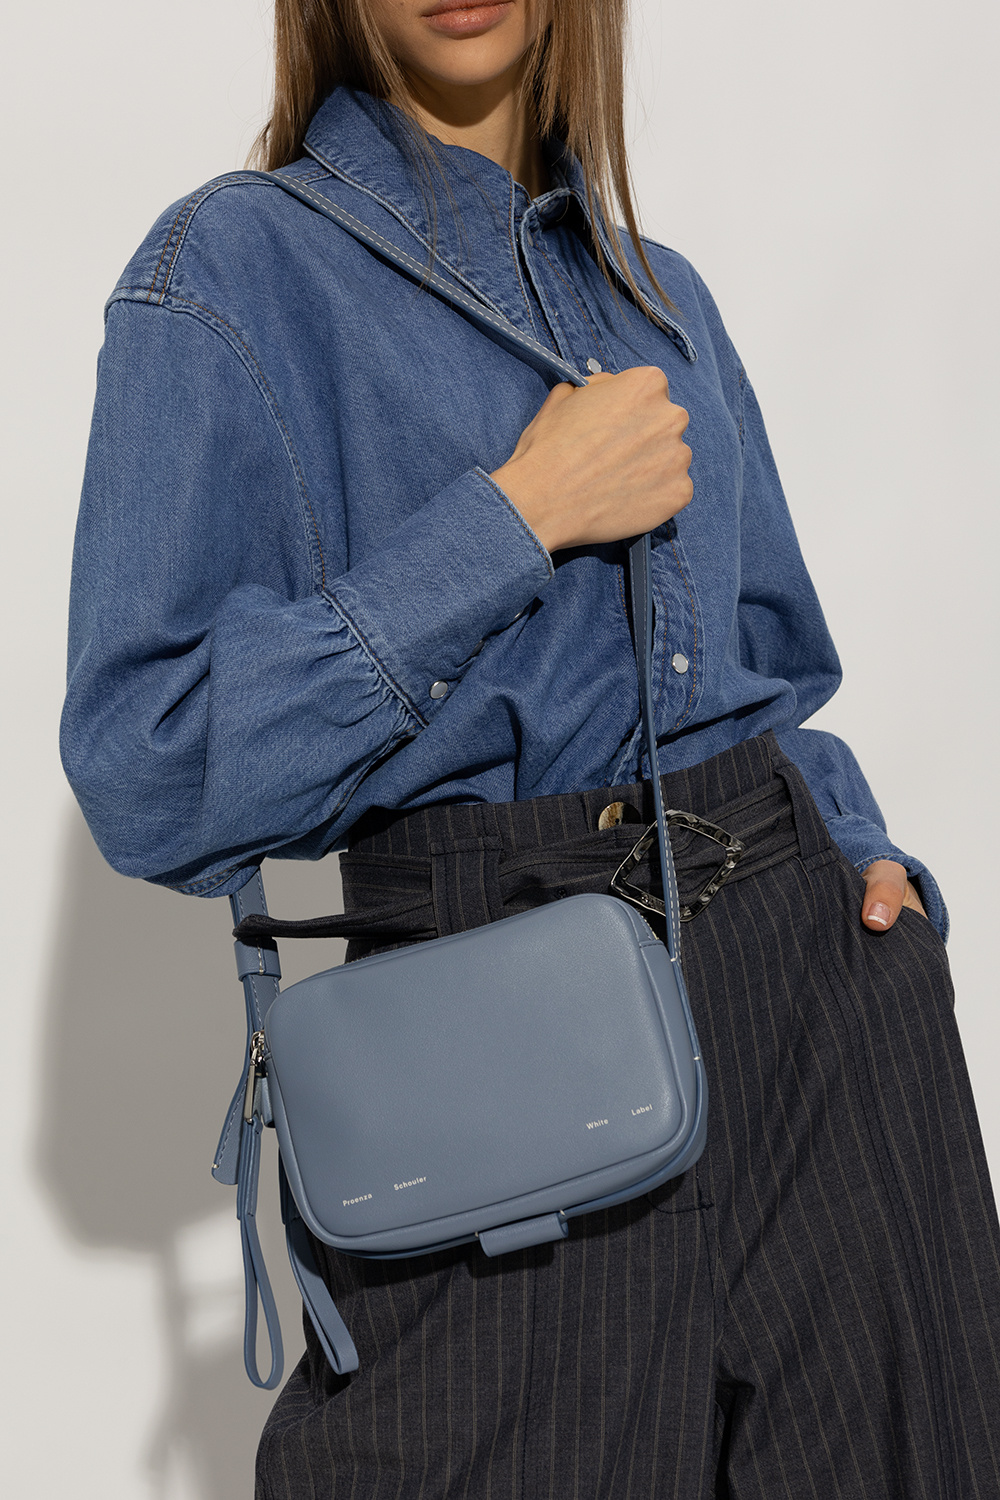 Proenza Schouler White Label 'Accordion' shoulder bag, Women's Bags